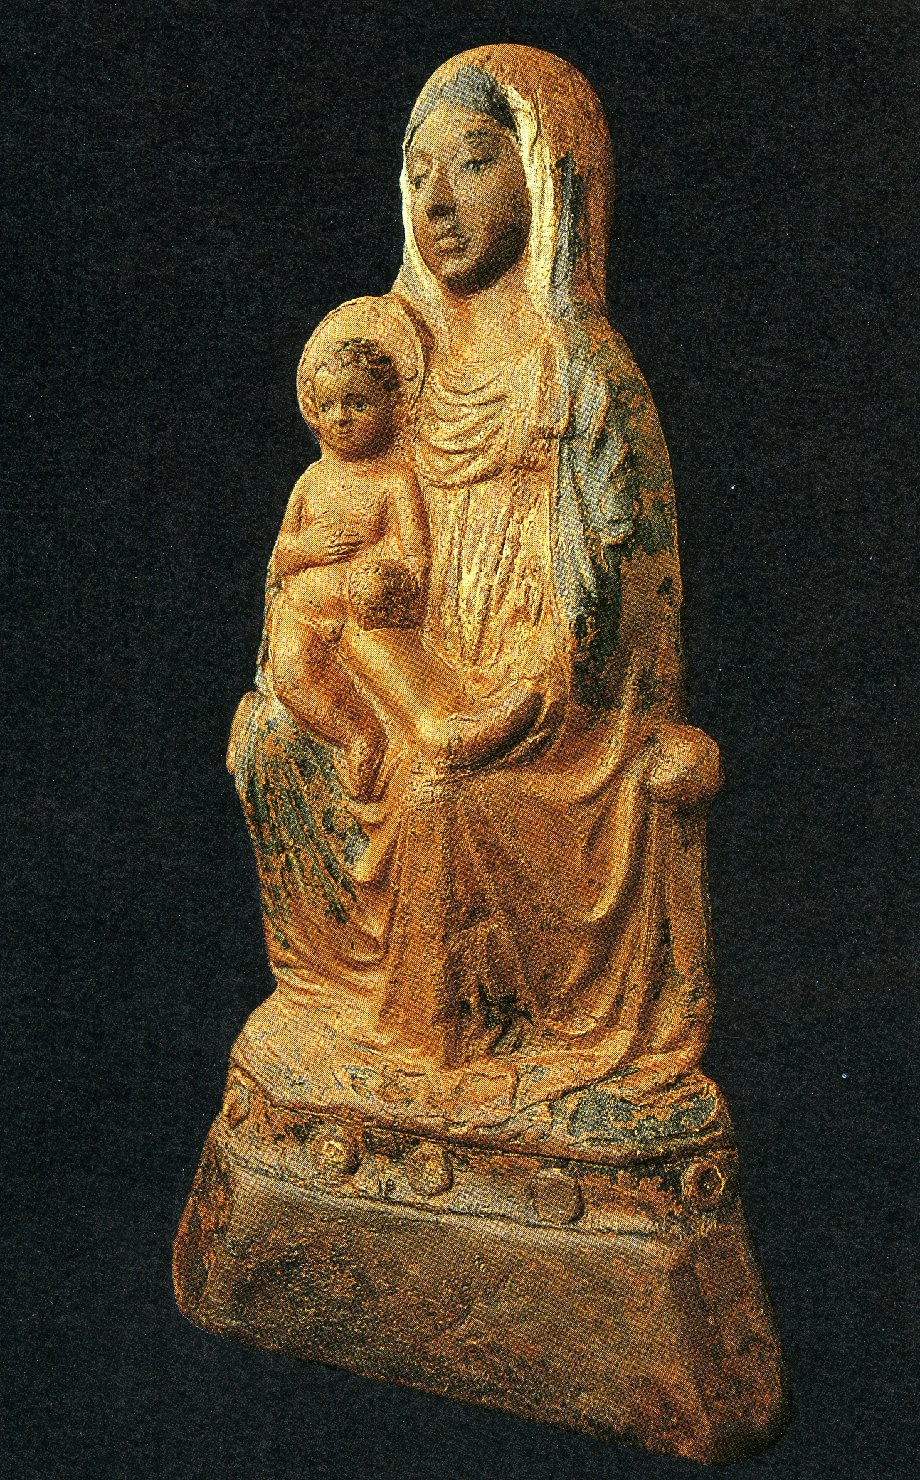 Nostra signora di valverde, madonna con bambino (statua)